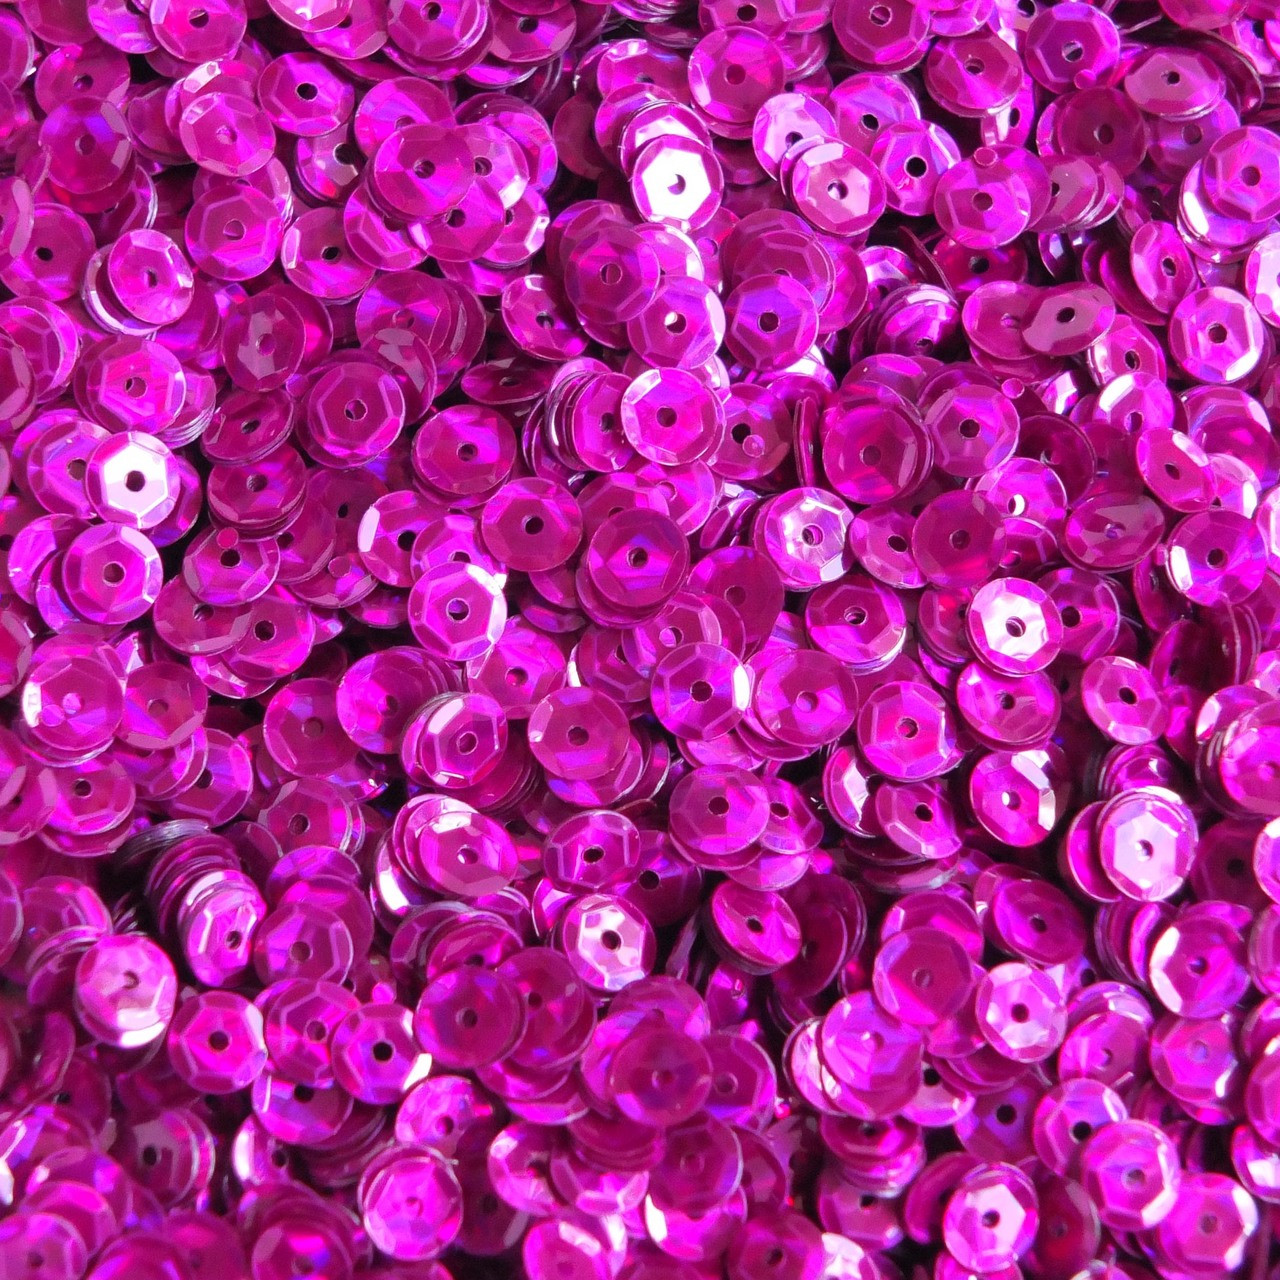 5mm Round Cup Sequins Fuchsia Pink Prism Reflective Metallic